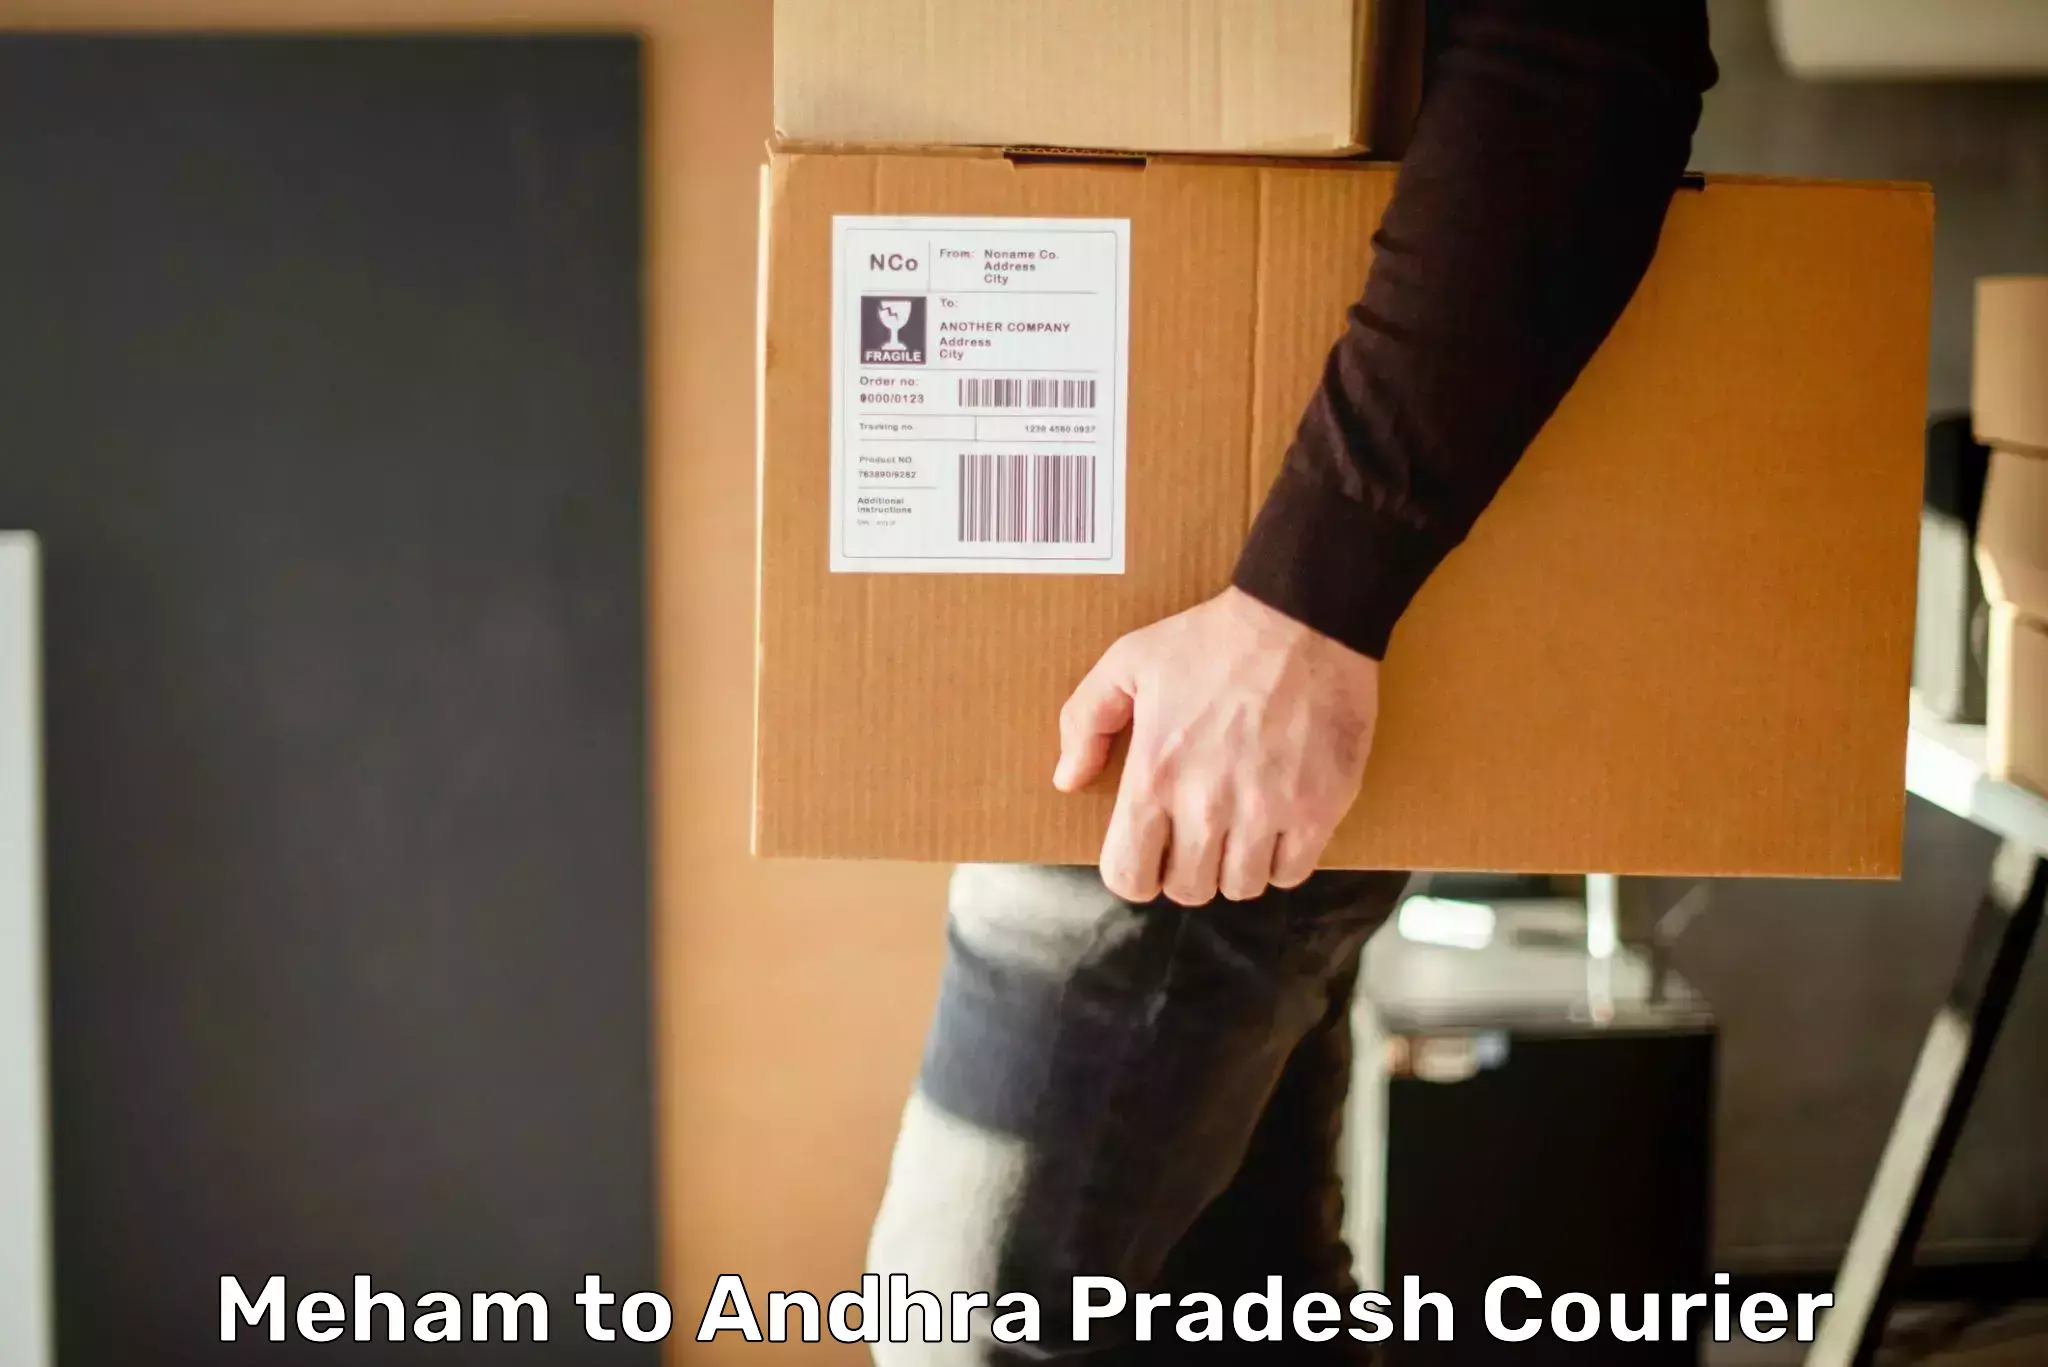 Optimized delivery routes Meham to Draksharamam